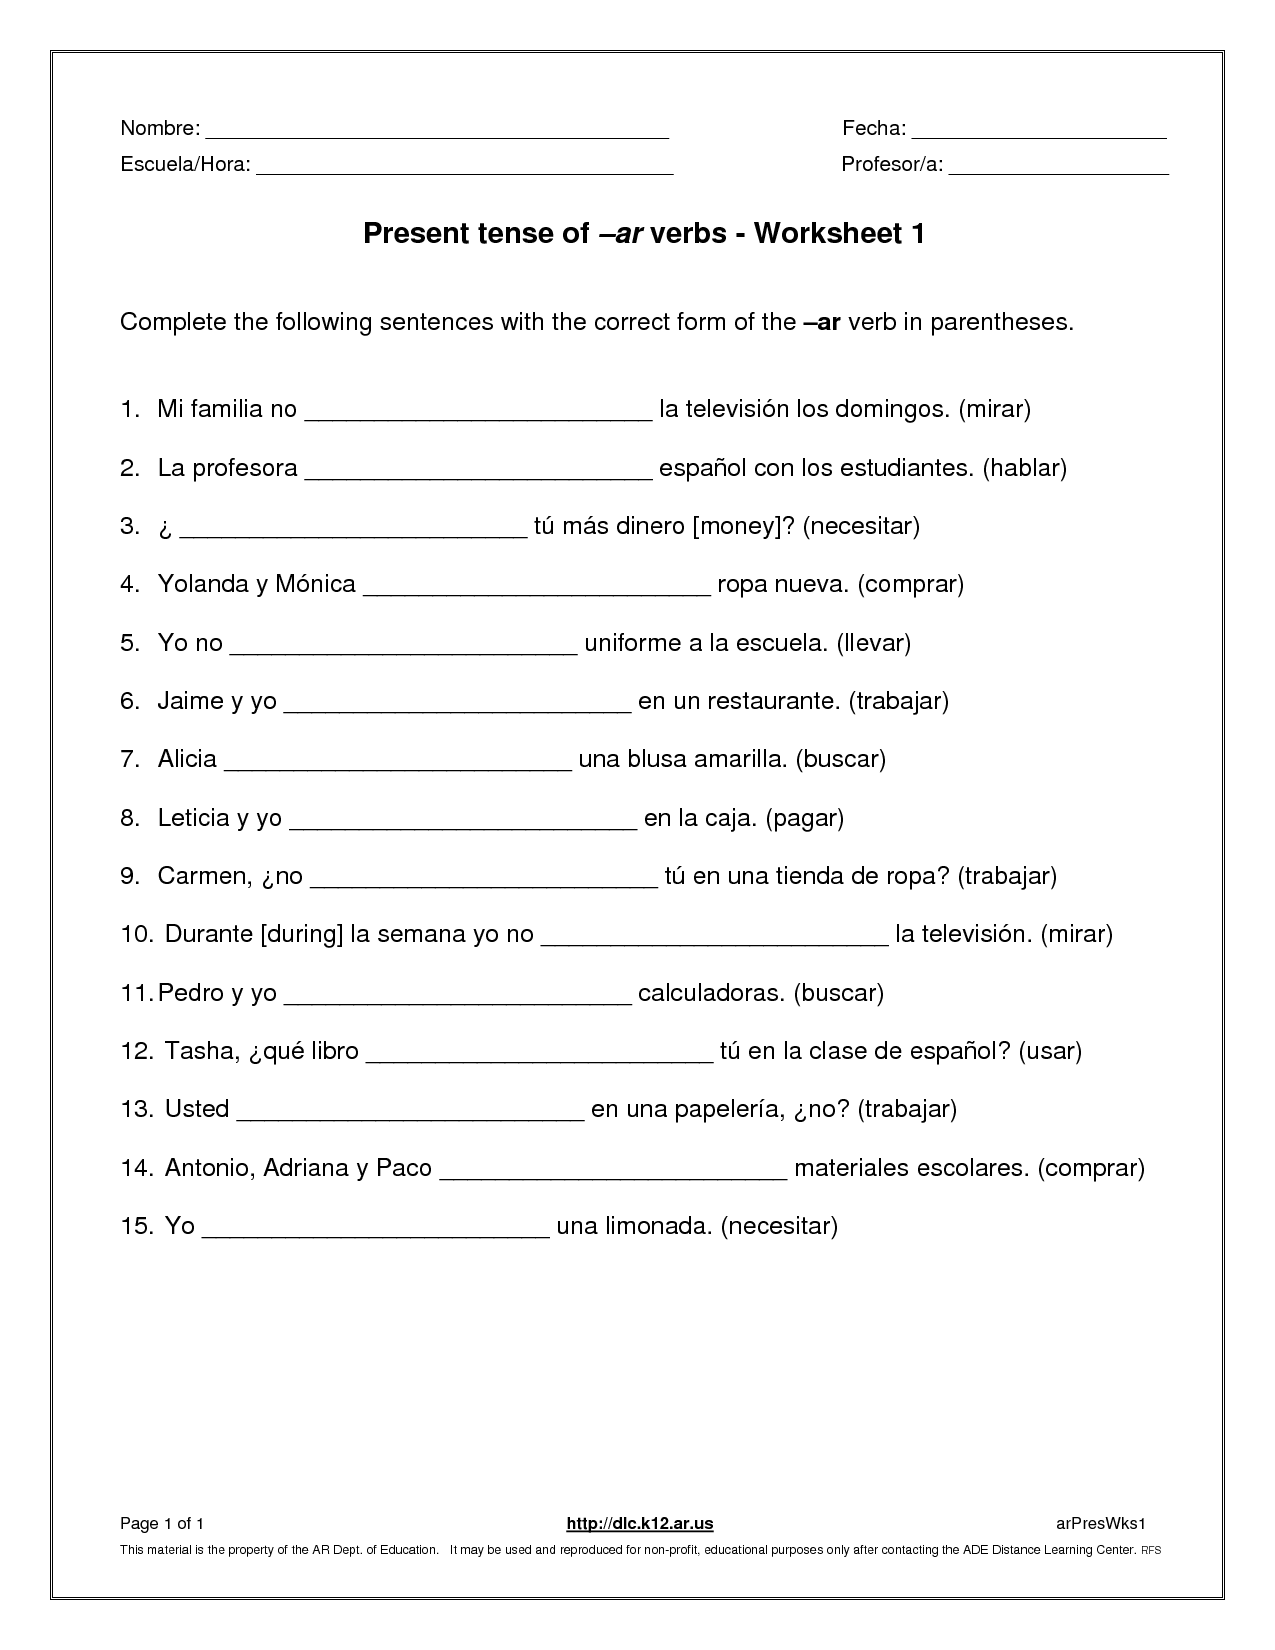 Present Tense Verbs Worksheets Image